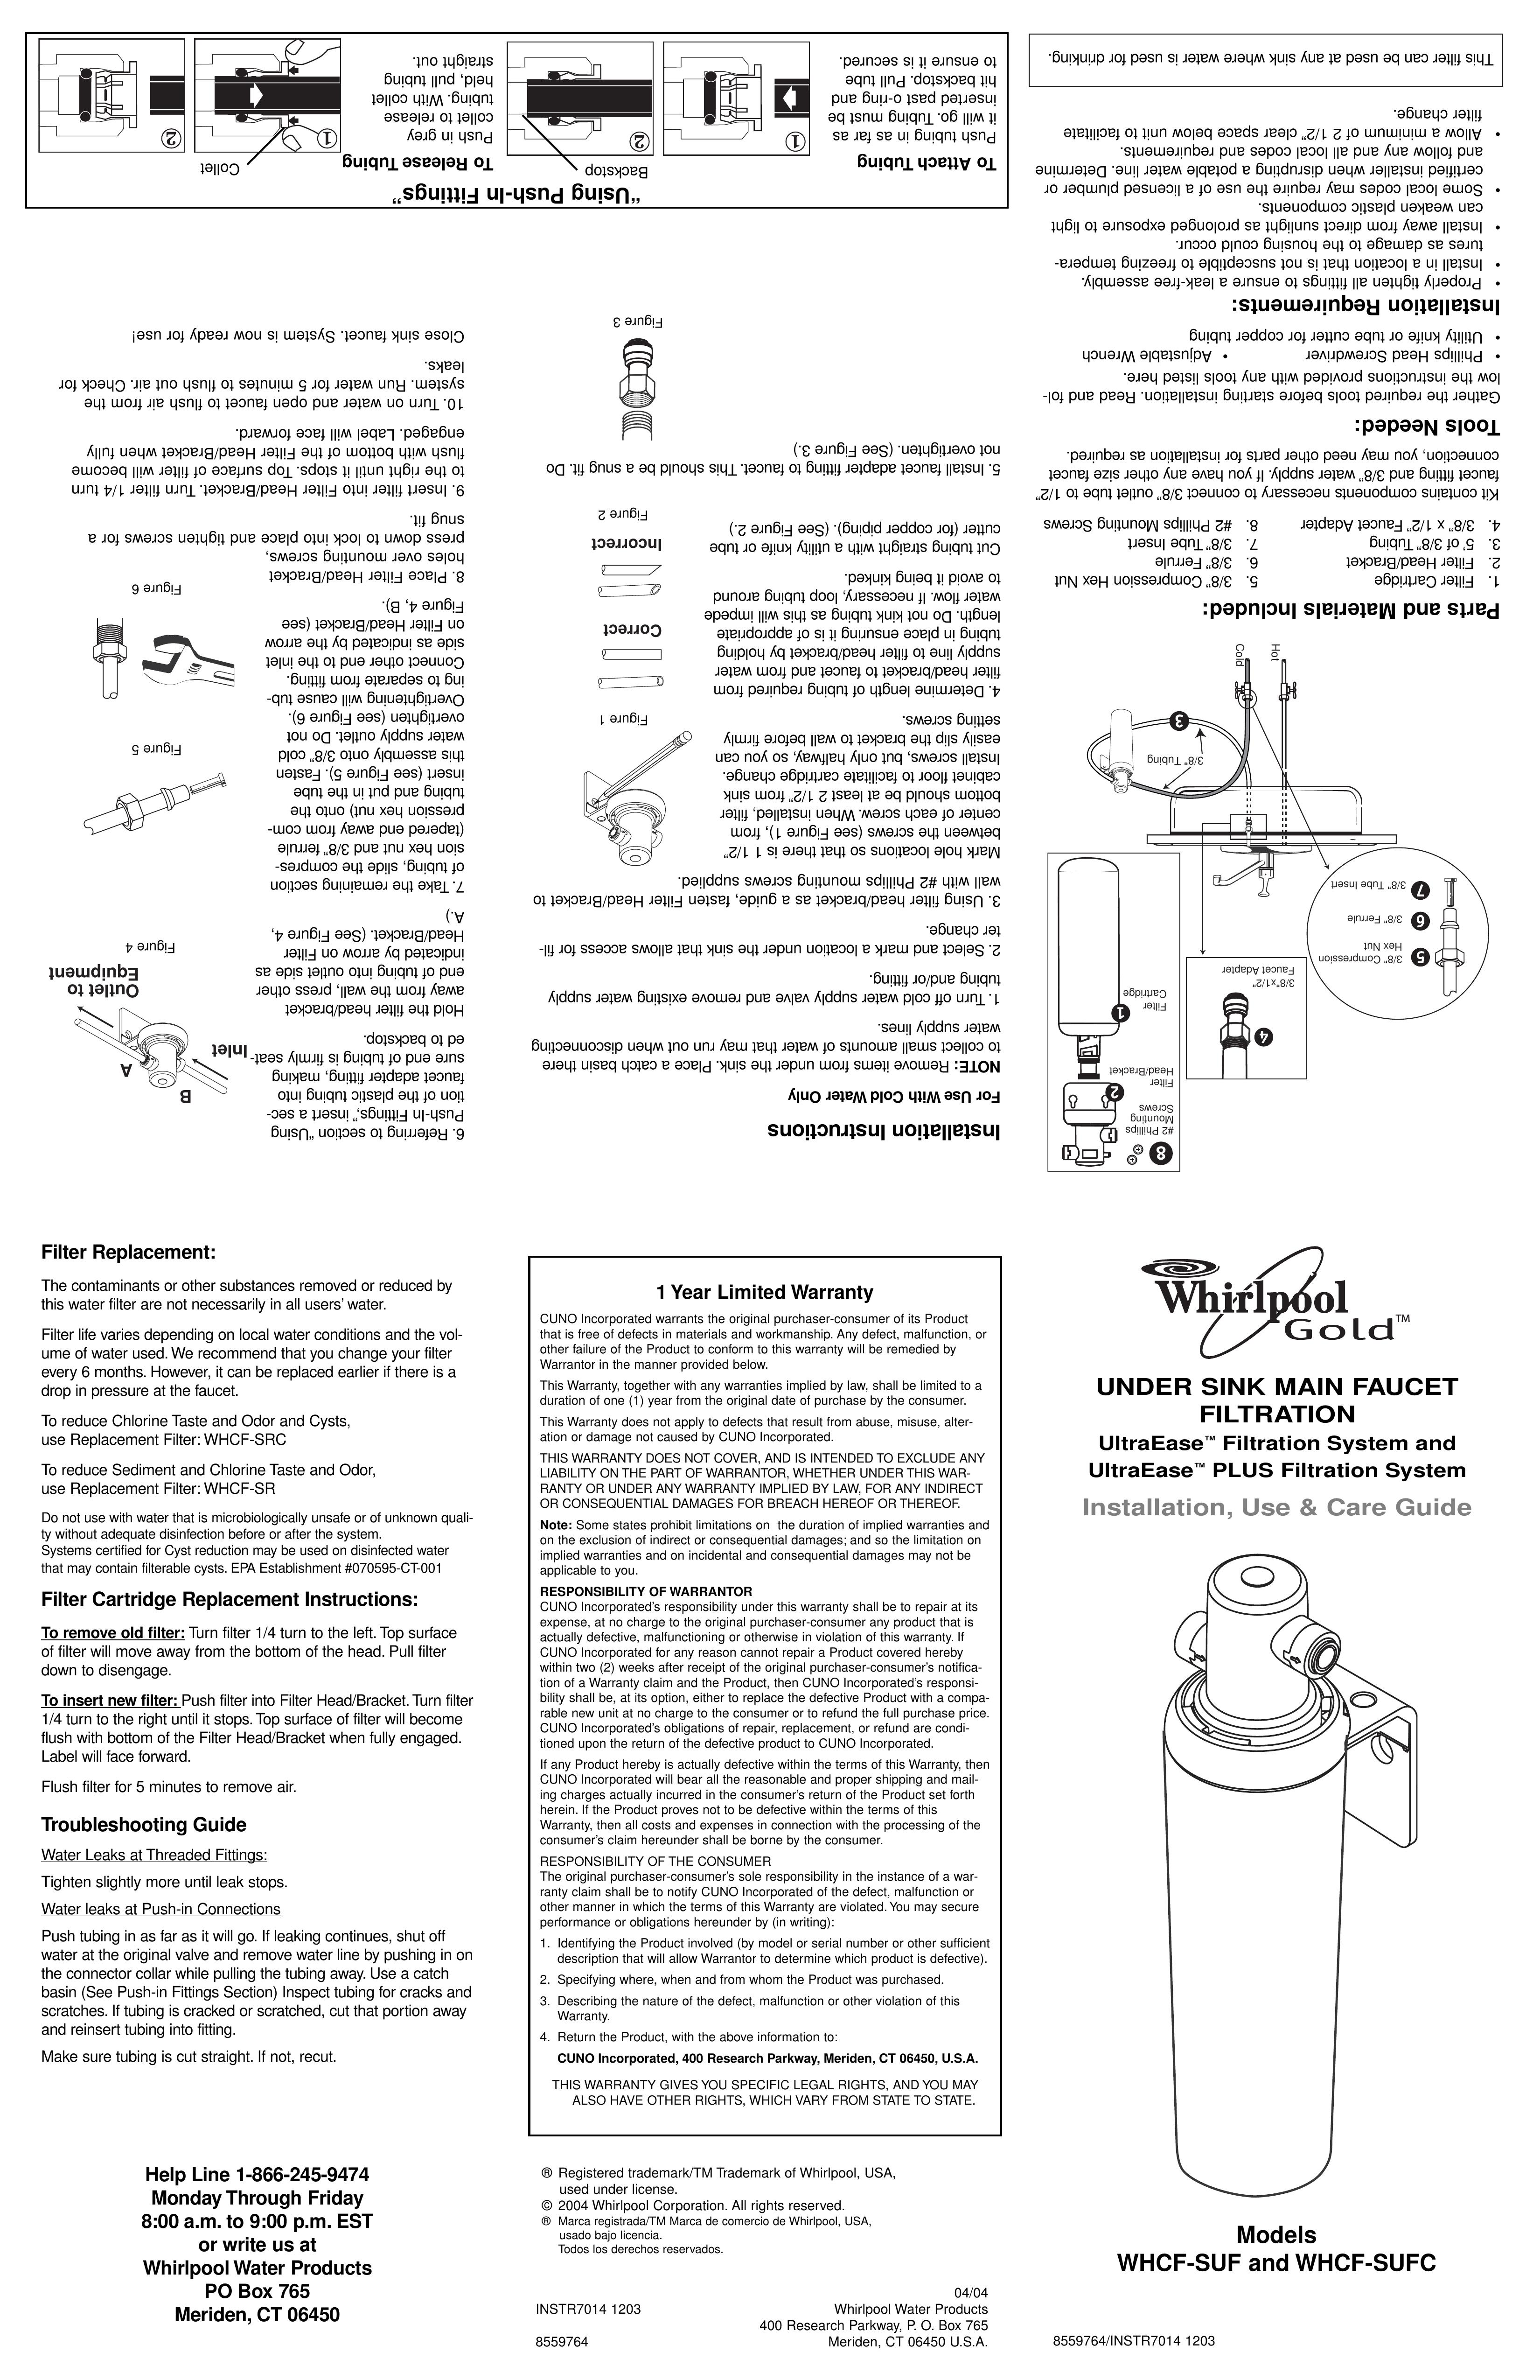 Whirlpool WHCF-SUFC Water Dispenser User Manual